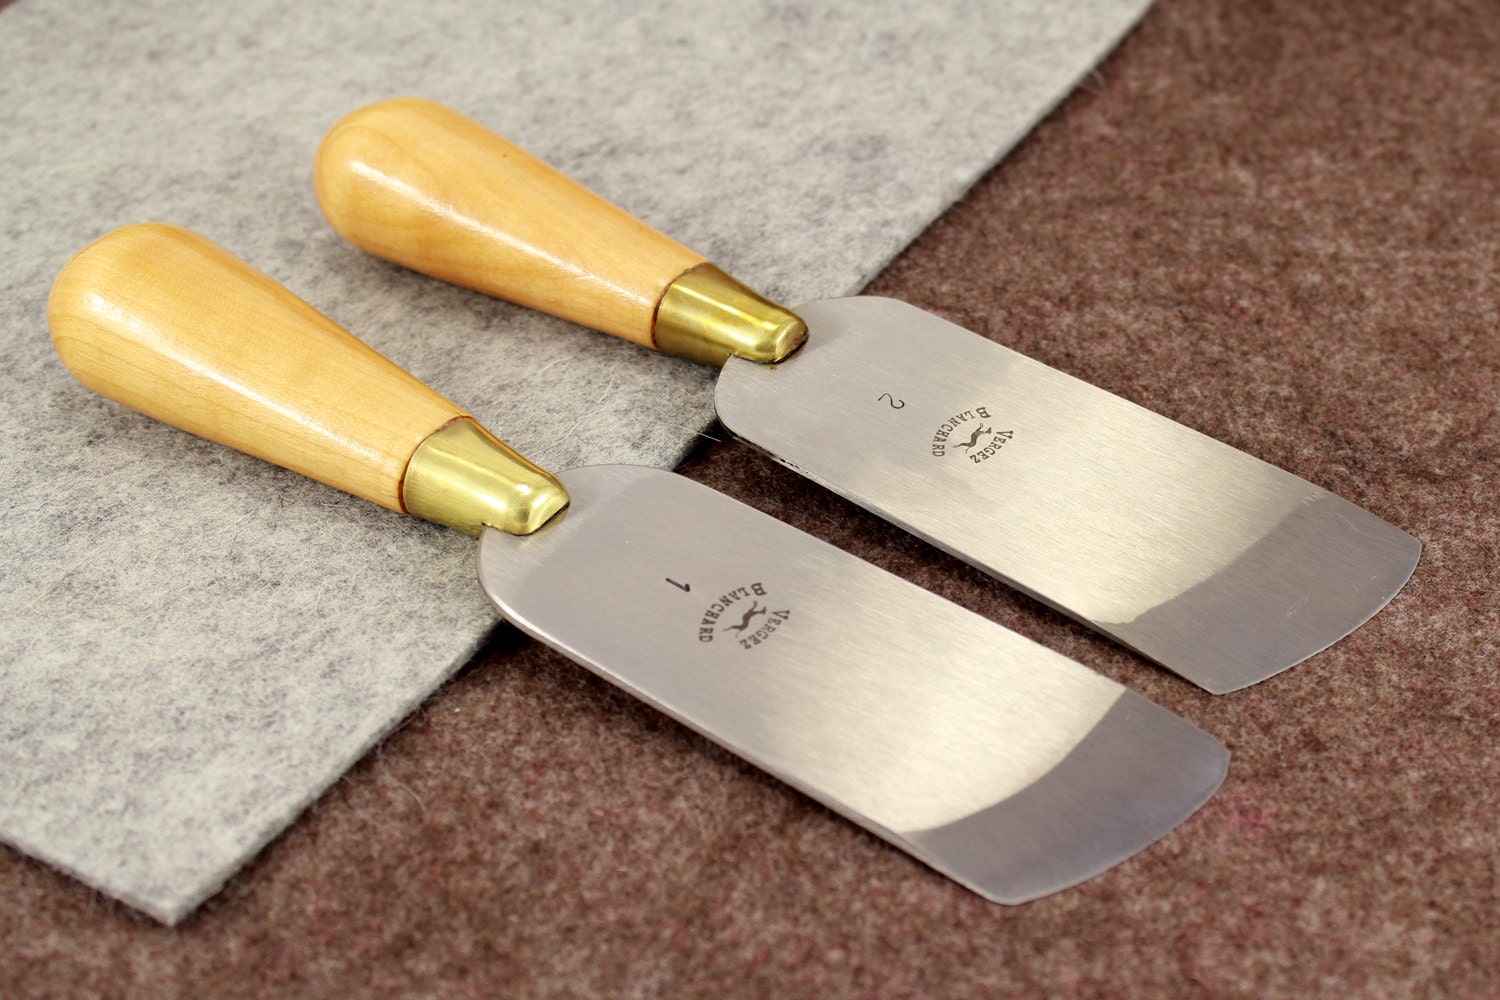 Edger/skiving tool for leather, vergez blanchard